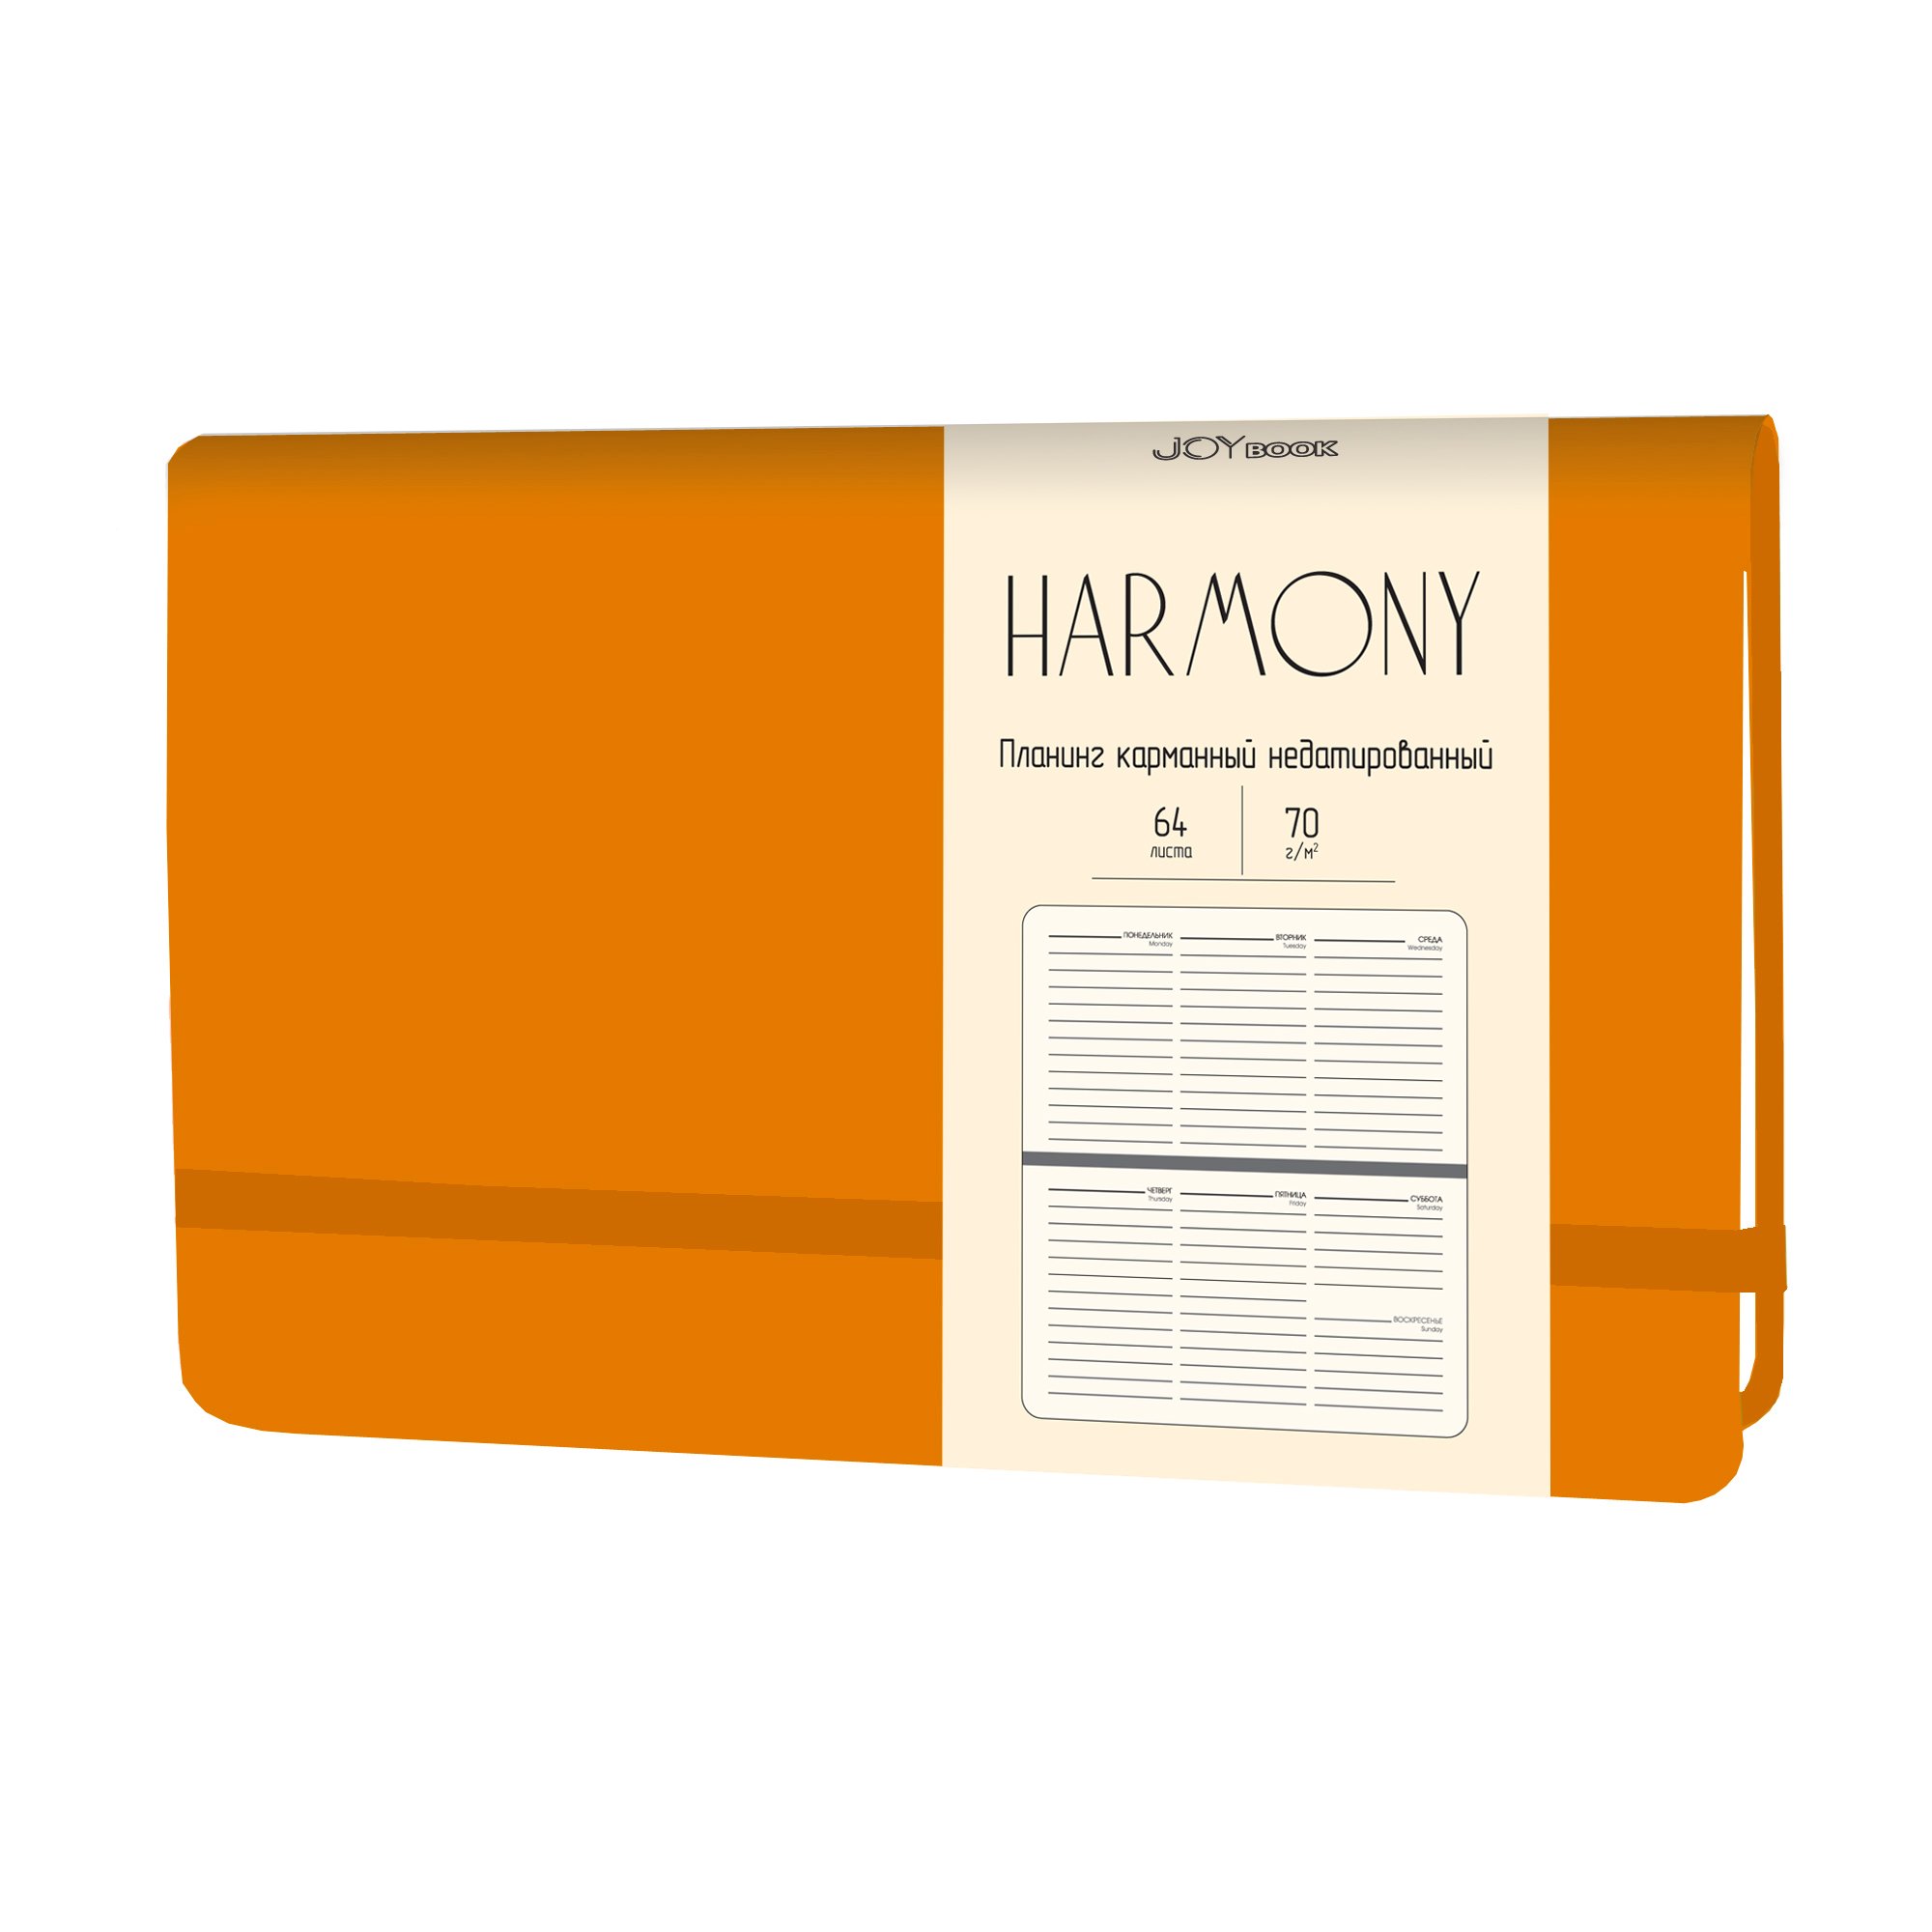 Планинг карманный Harmony недатированный, 64 листа, оранжевый